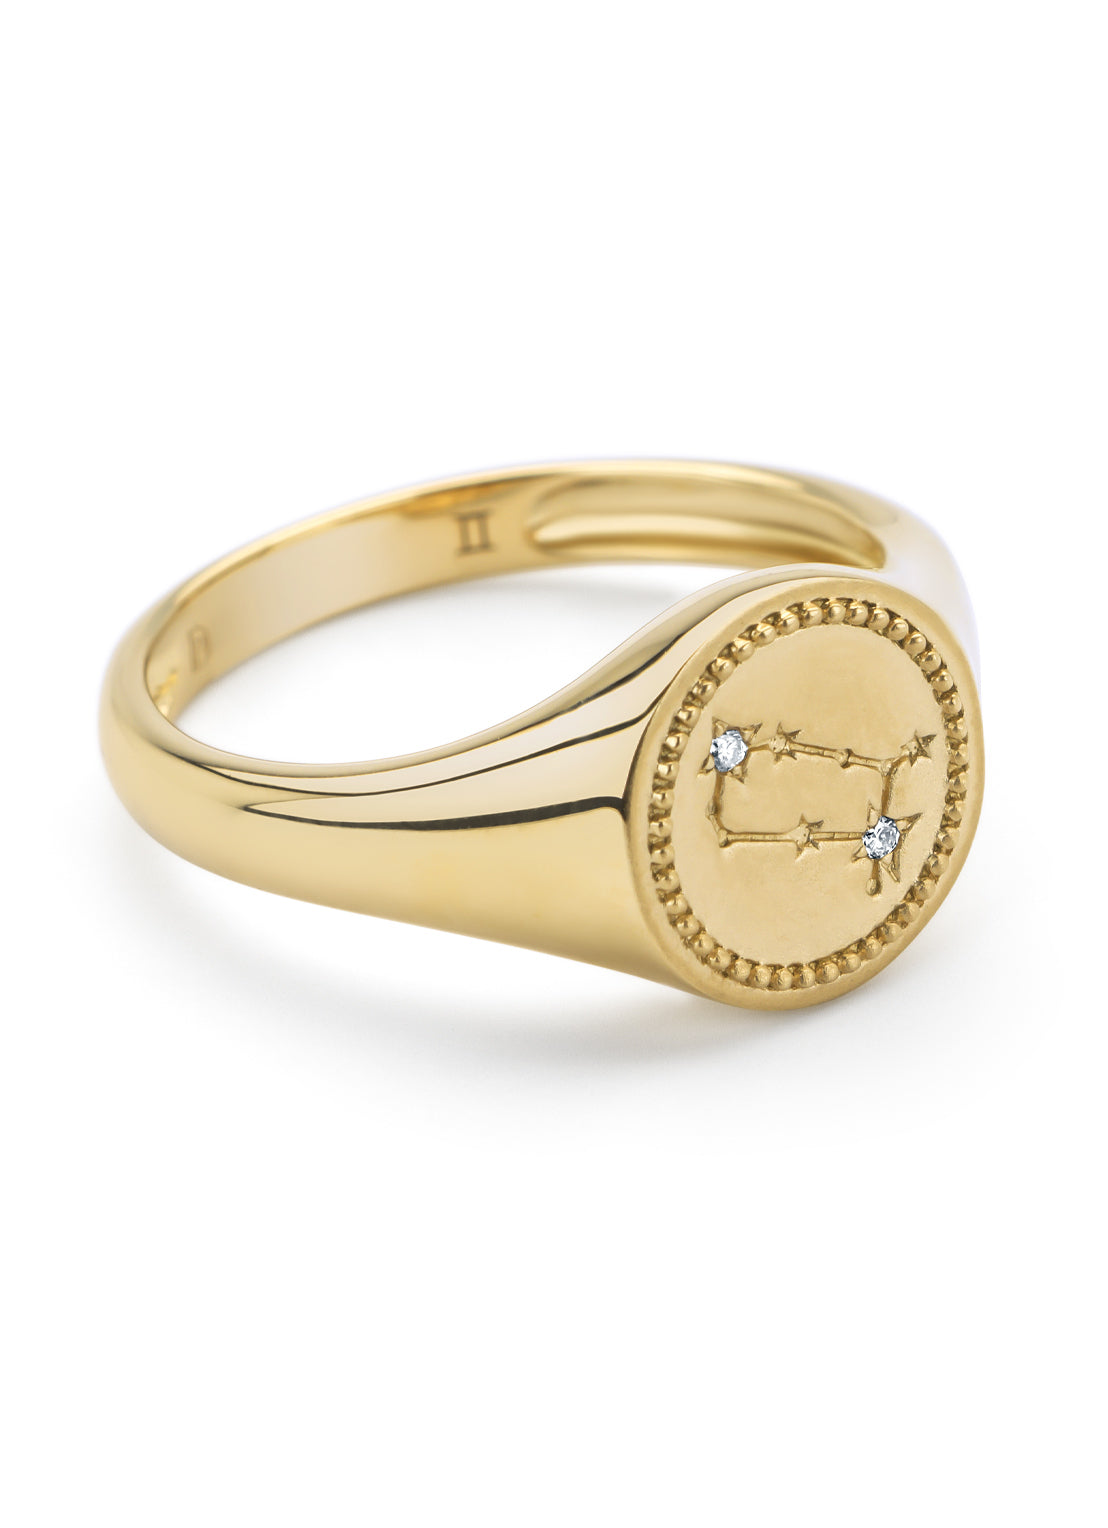 Yellow gold signet ring, zodiac-gemini (twins)